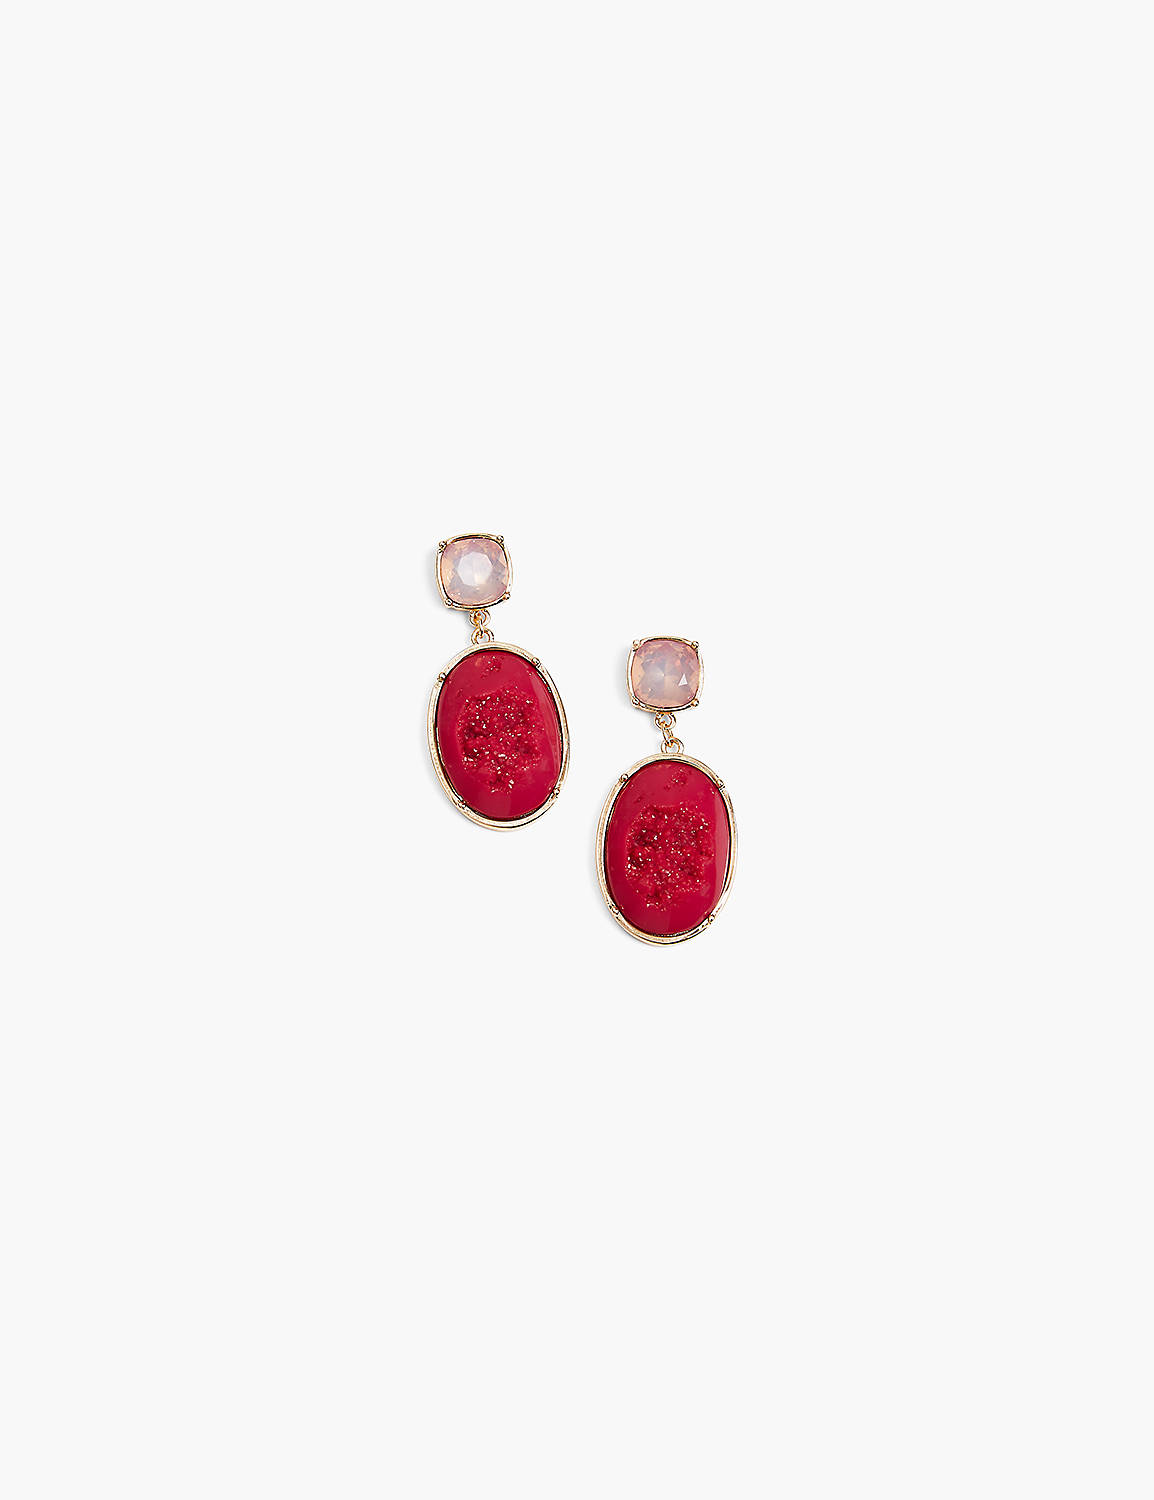 Pink Druzy Drop Earrings Product Image 1